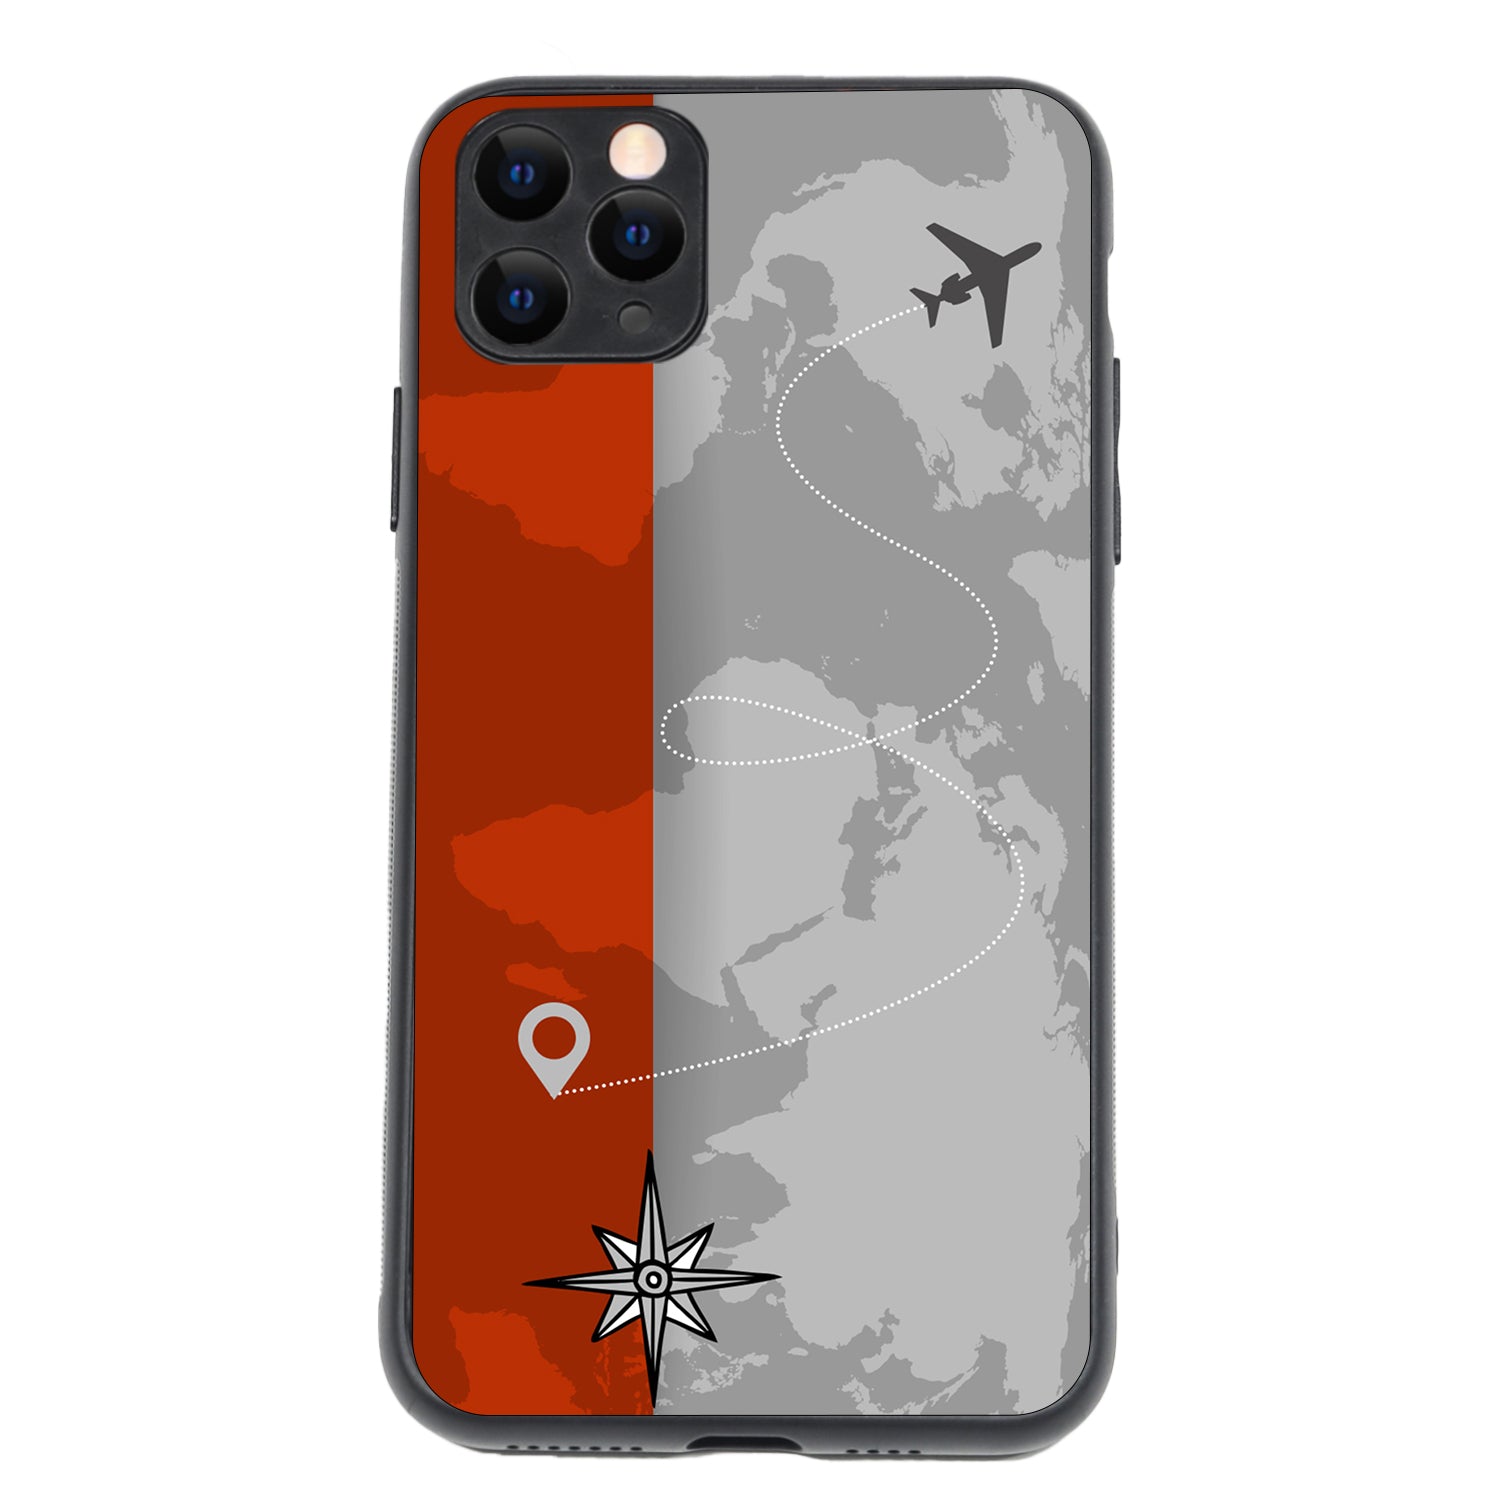 World Tour Travel iPhone 11 Pro Max Case